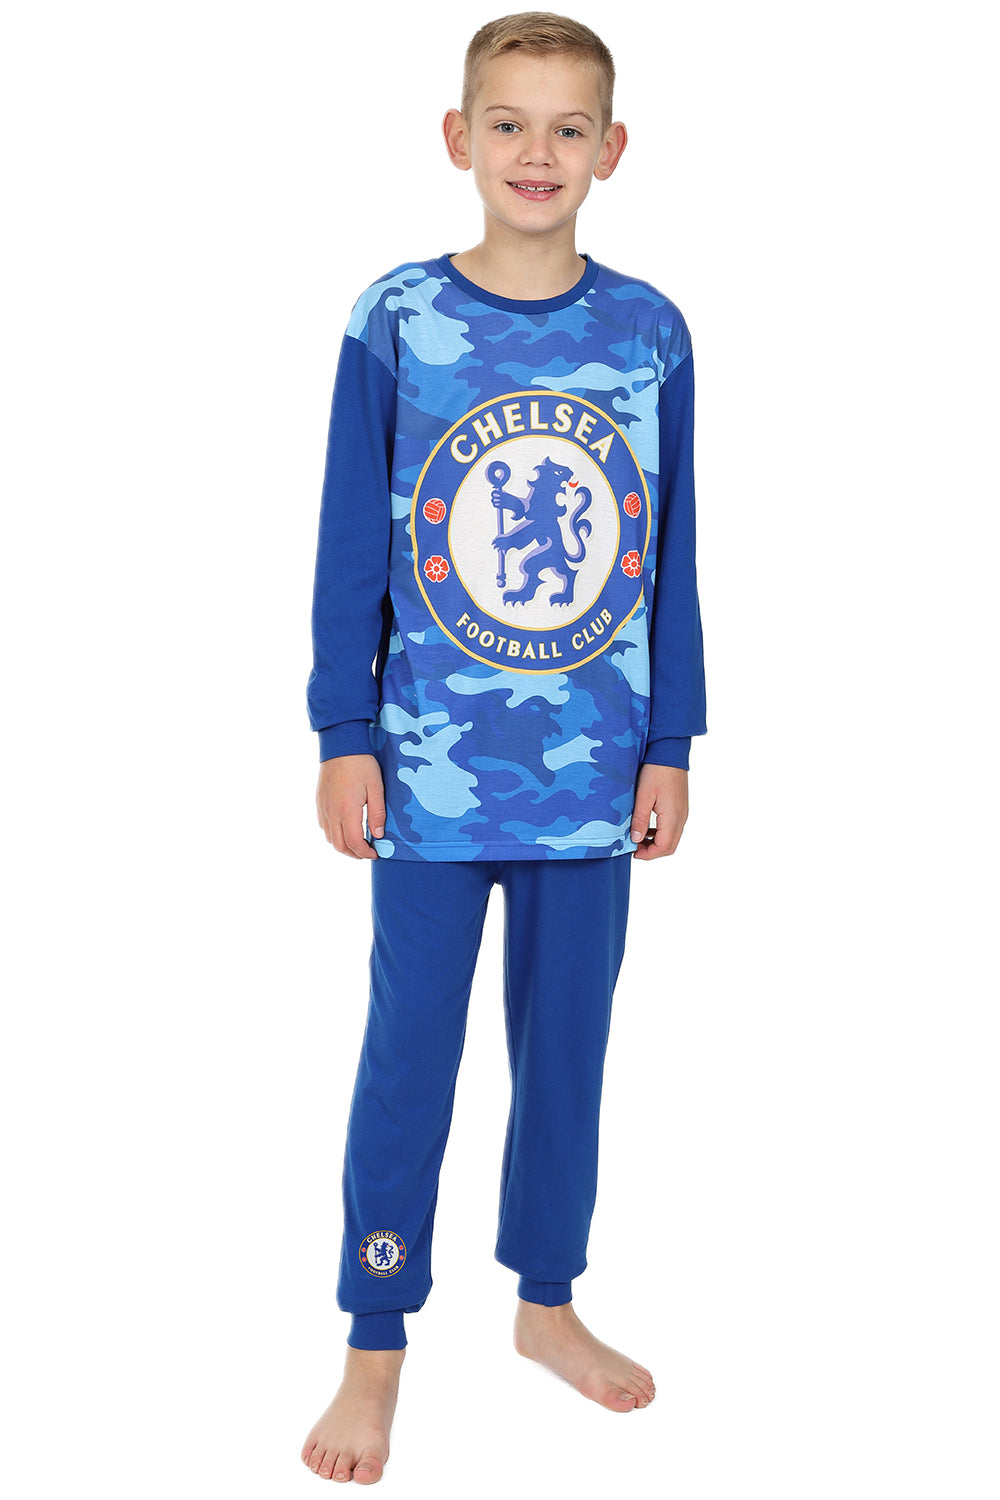 Boys Chelsea F.C Blue Camouflage Long Pyjamas